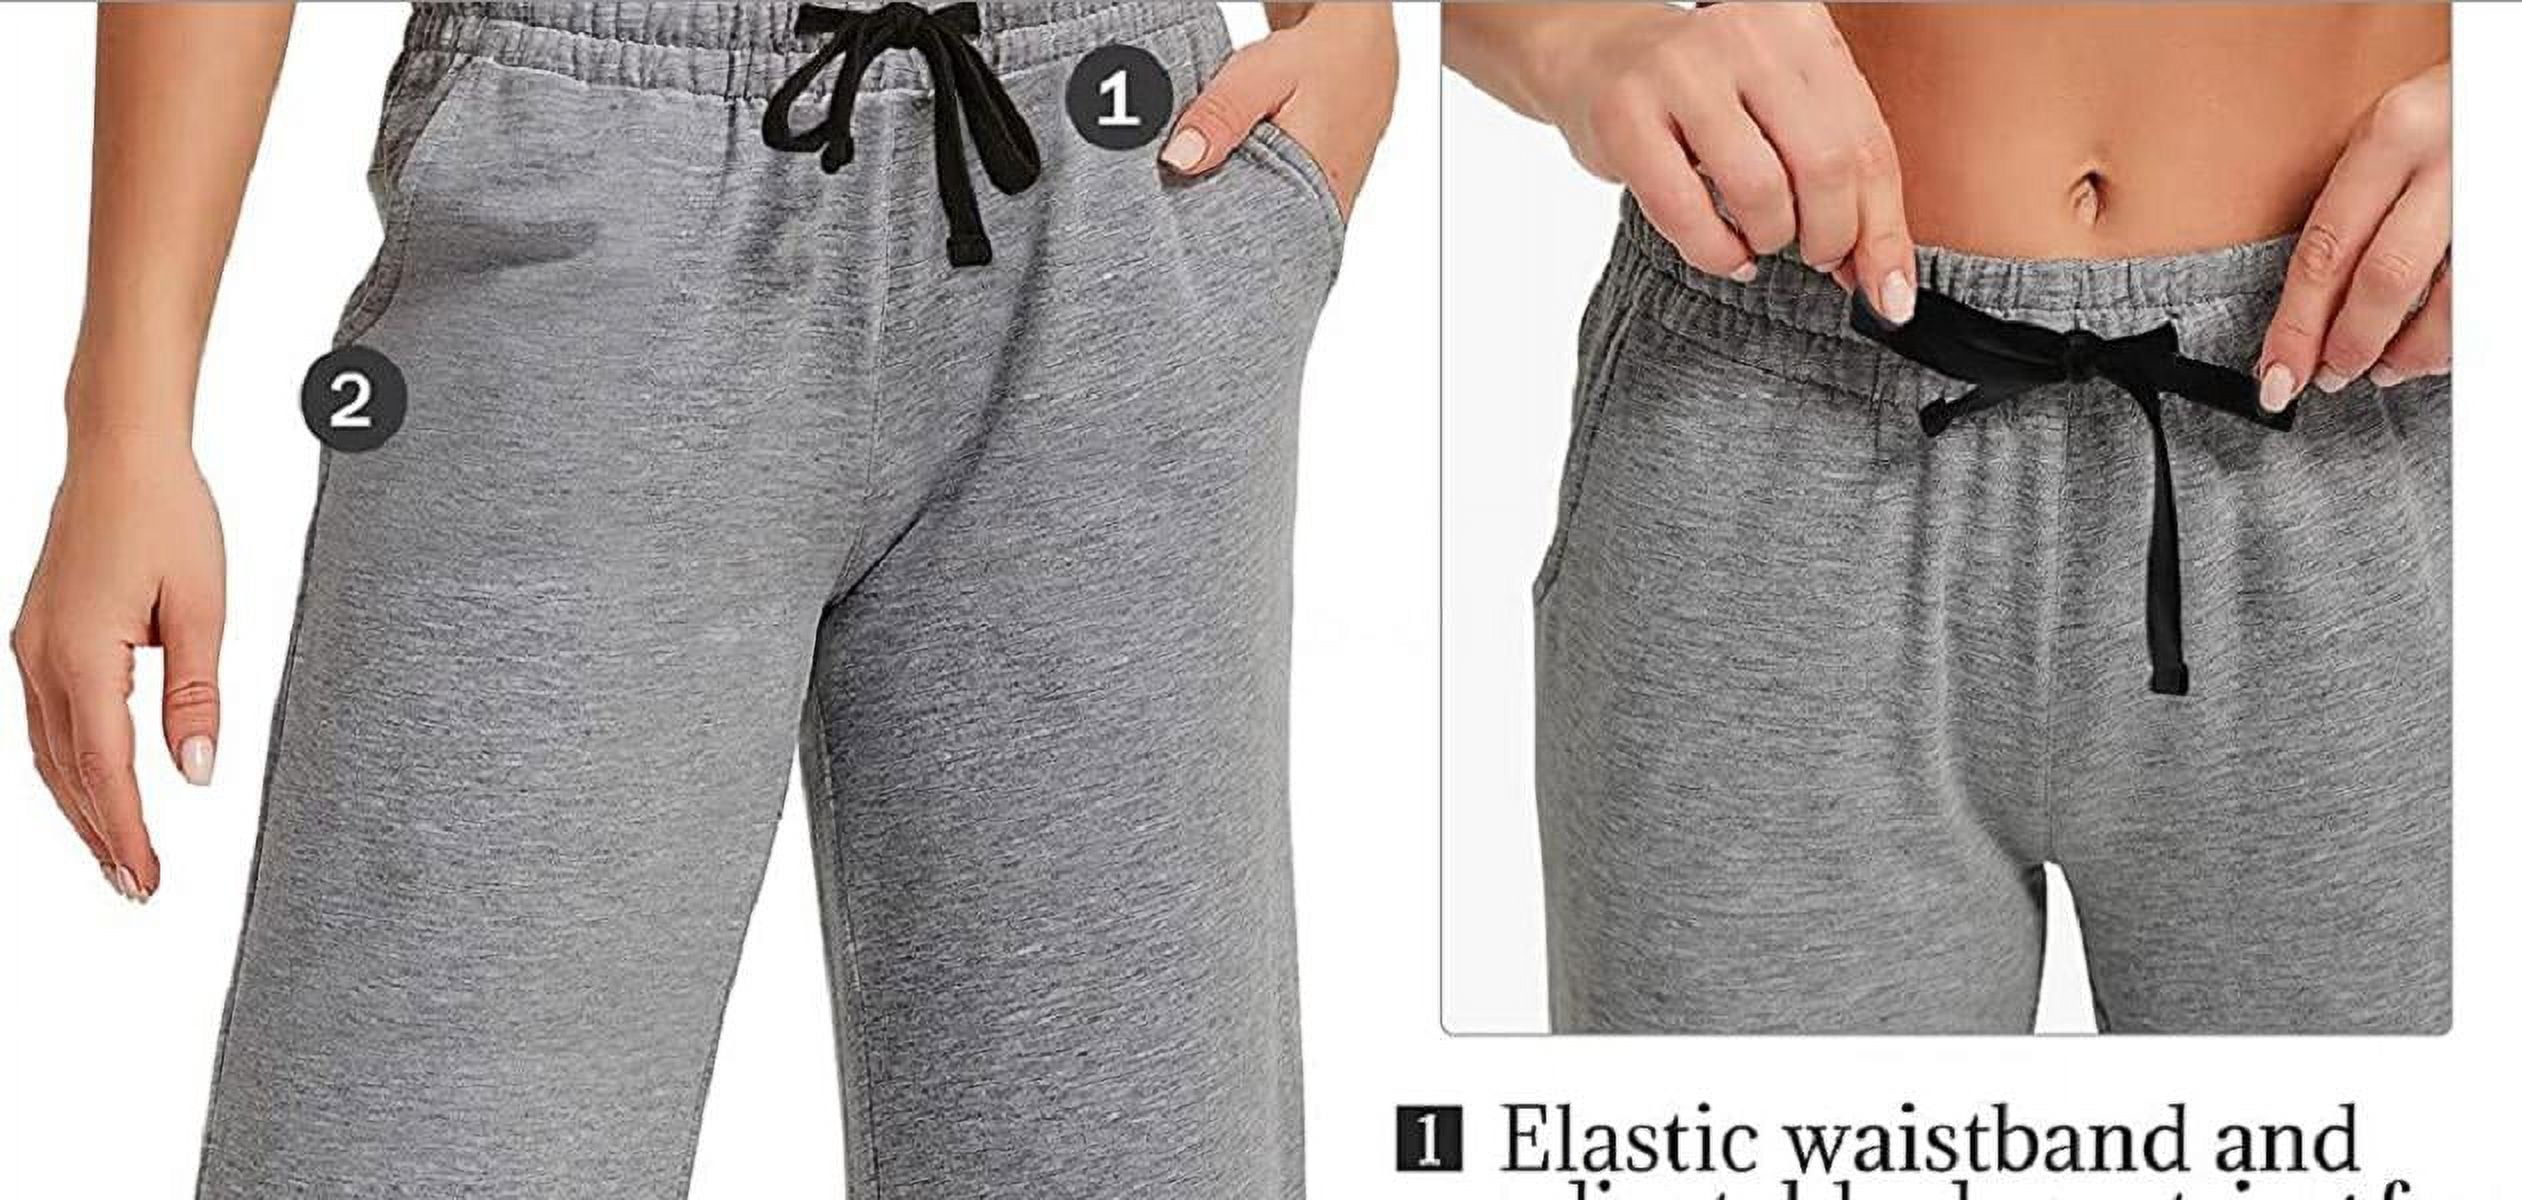 Women's Capri Yoga Pants Quick Dry High Waisted Hiking Lightweight